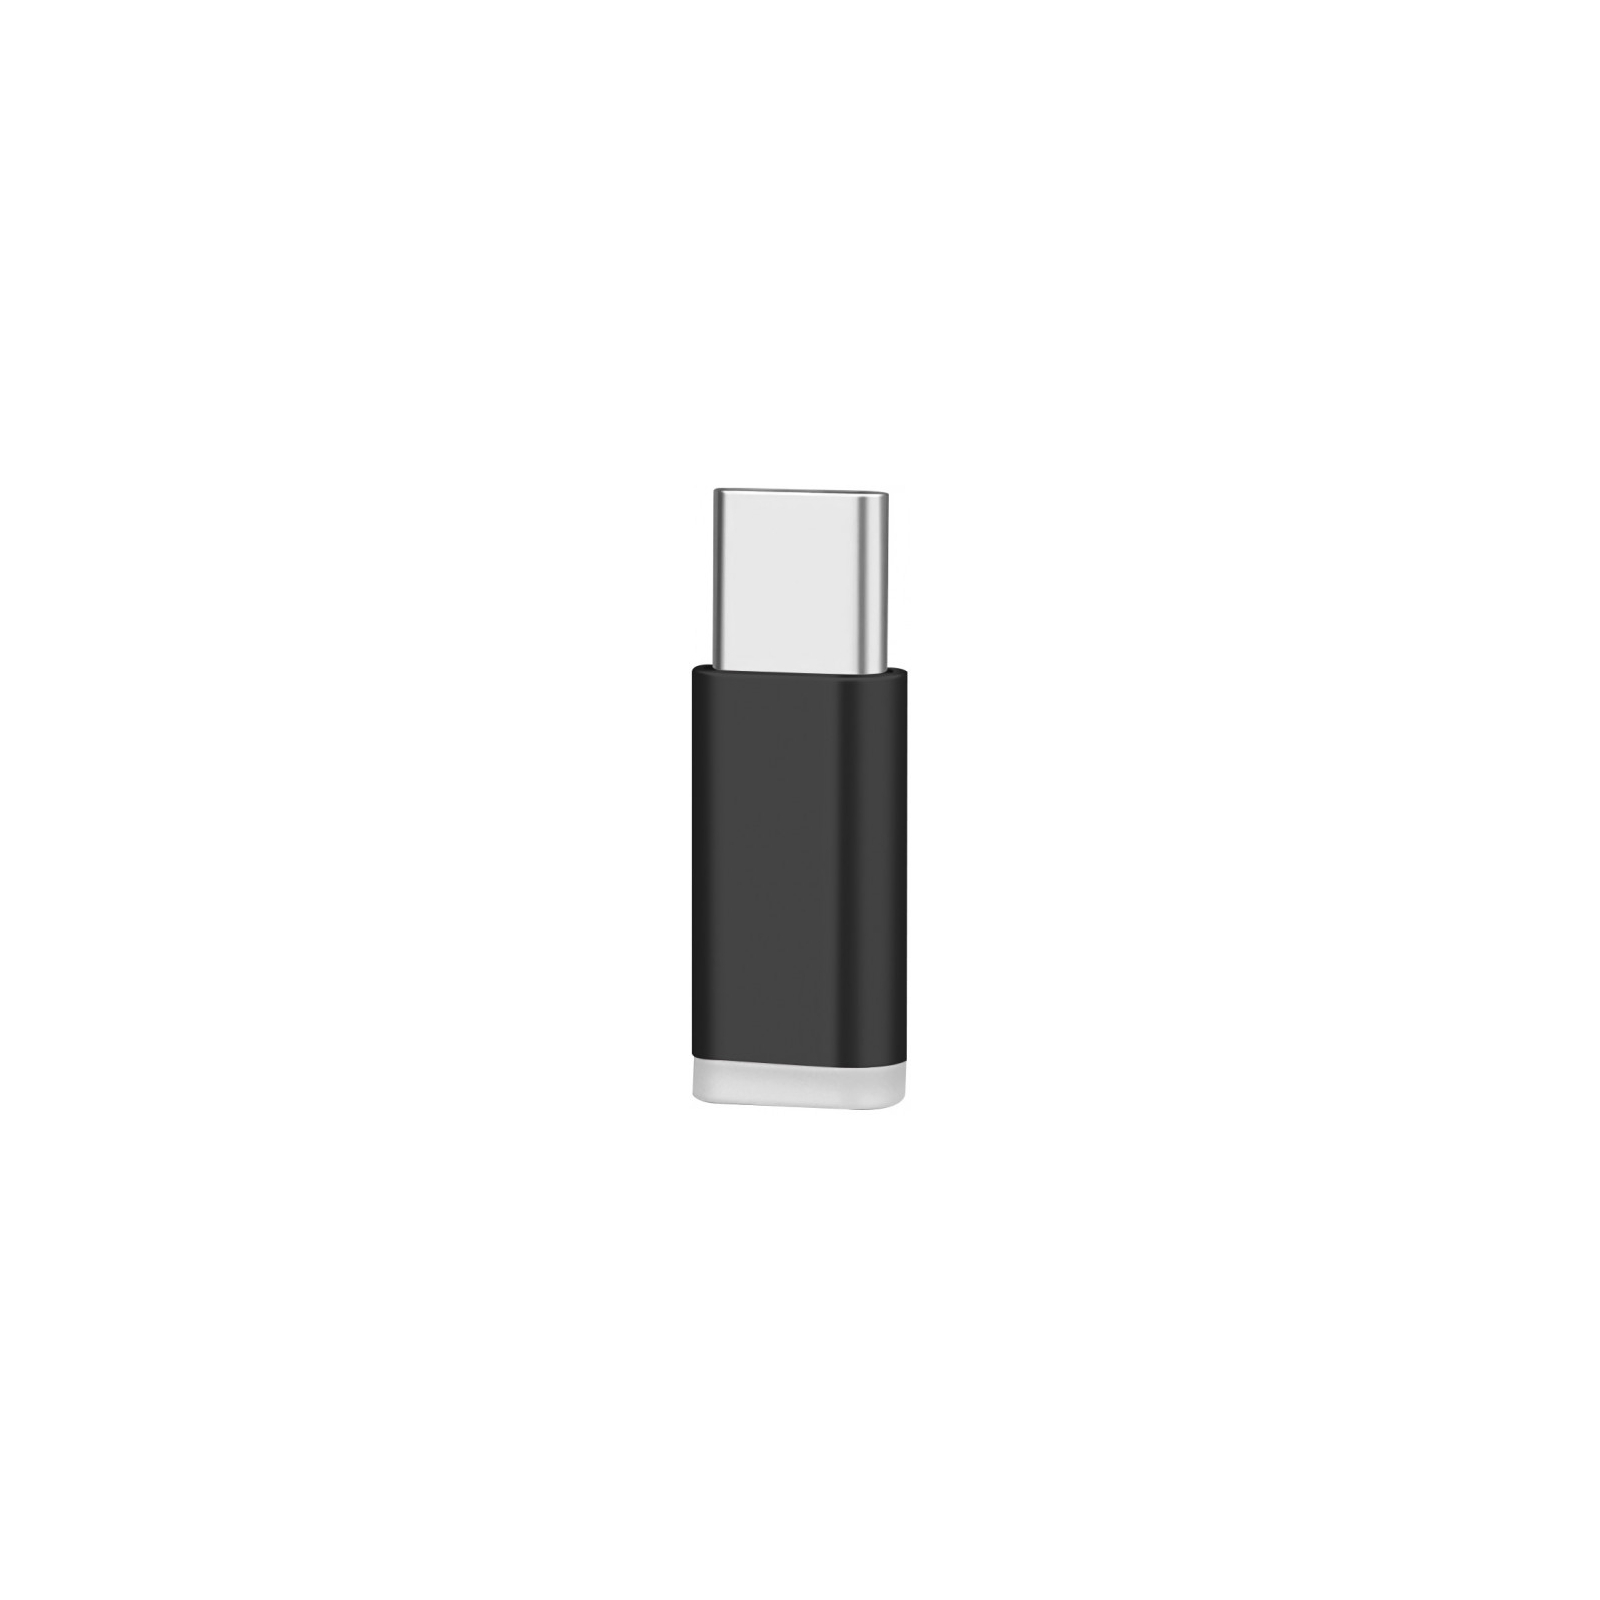 Переходник Micro USB to Type-C black XoKo (XK-AC010-BK)